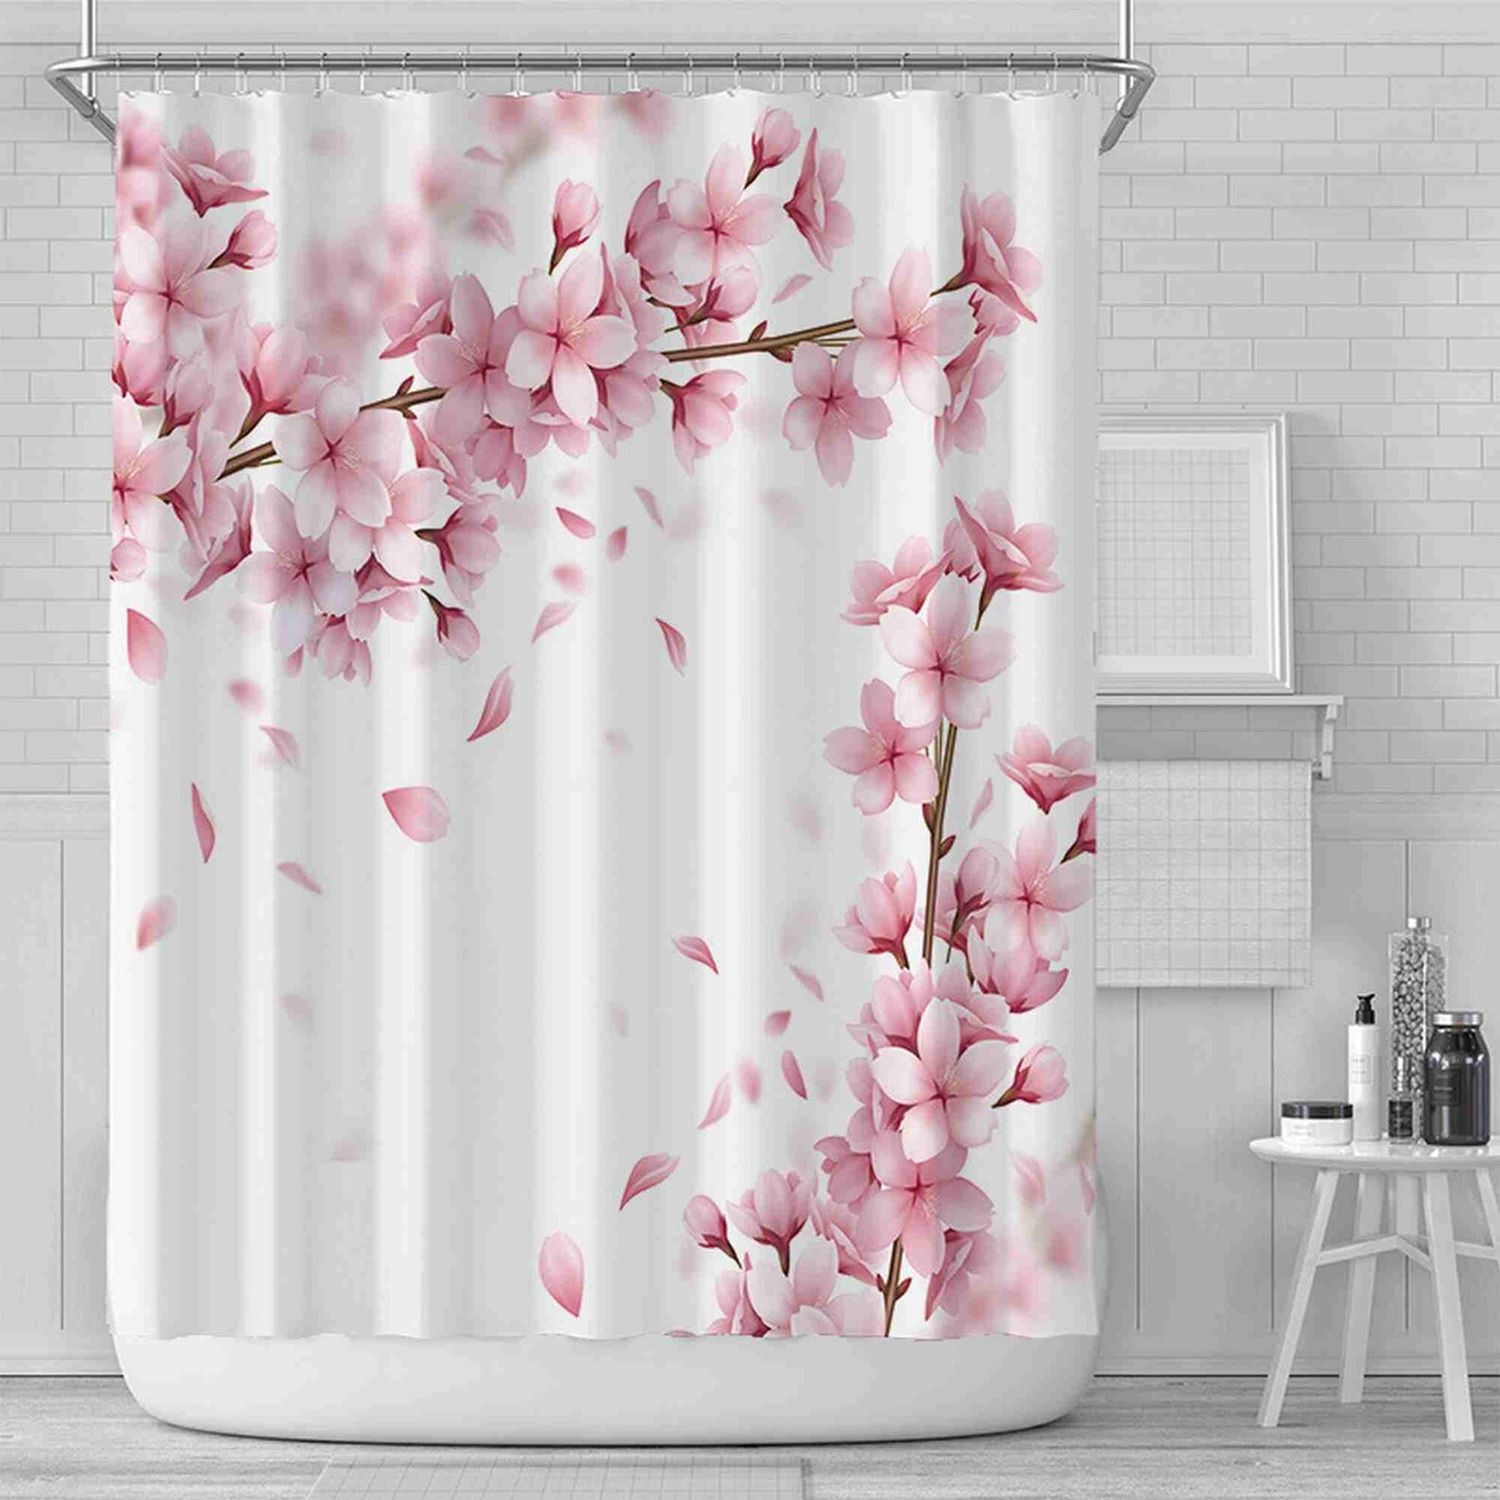 8 Best Cherry Blossom Shower Curtain for 2023